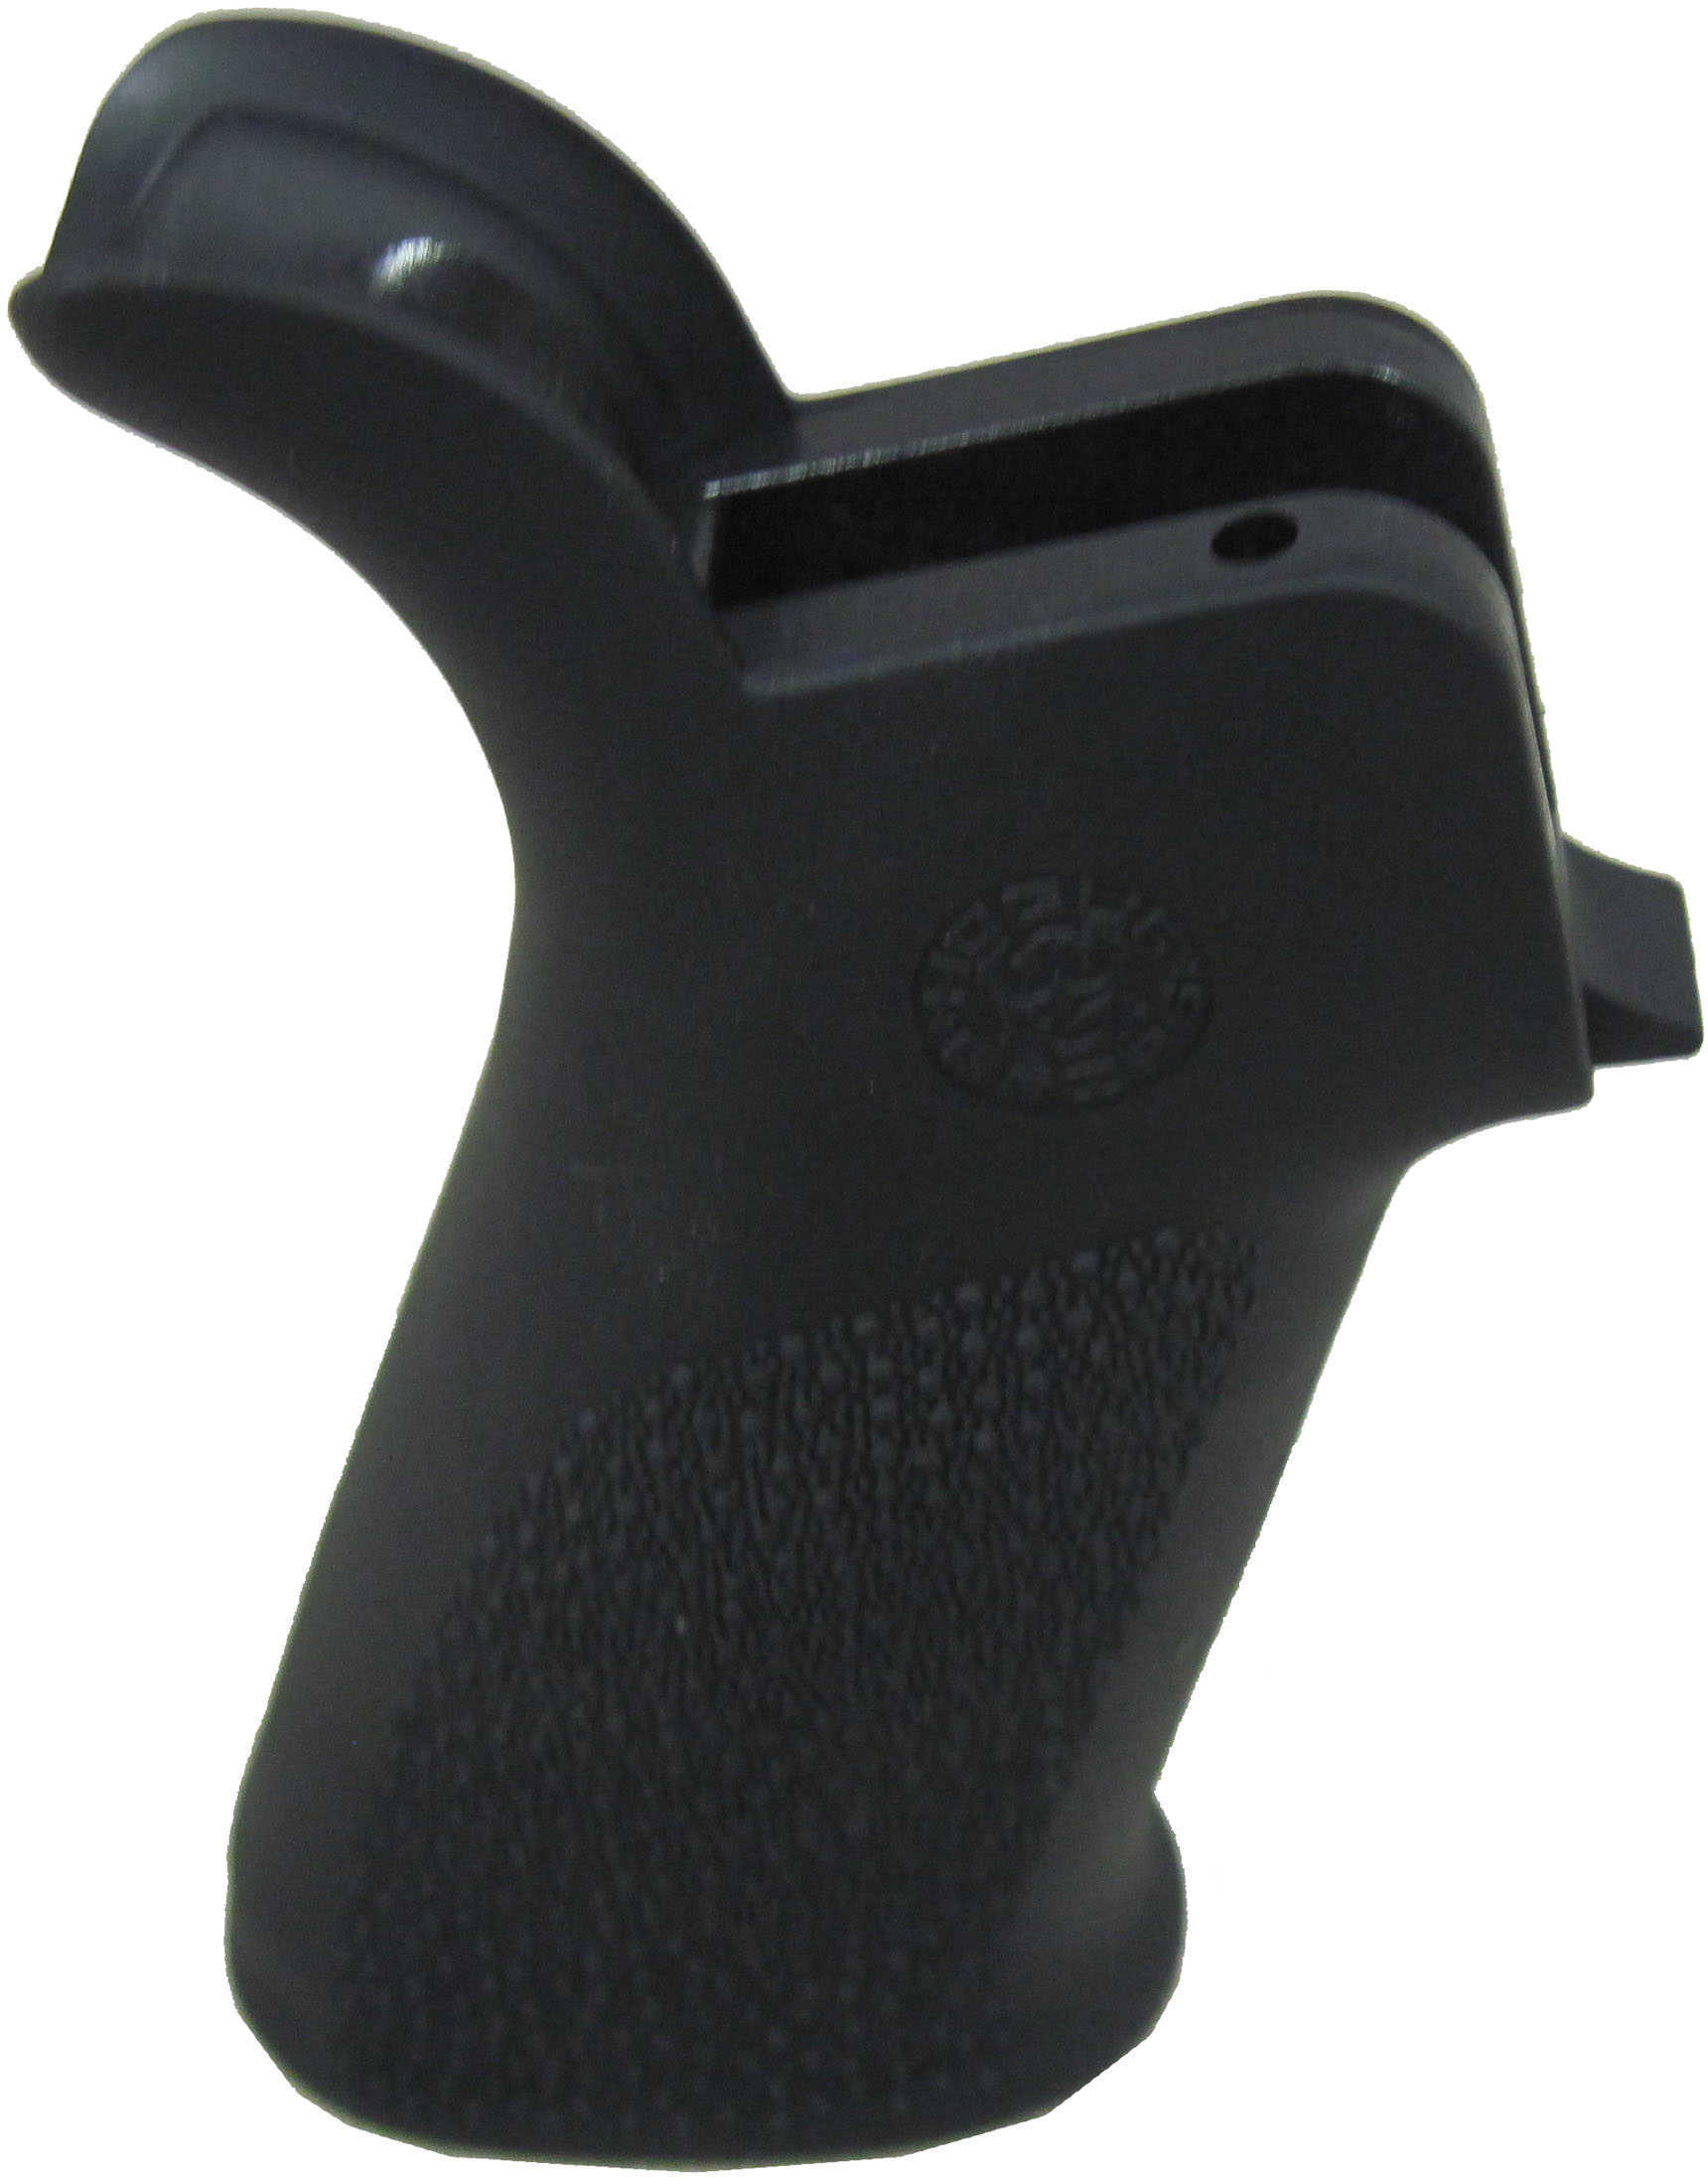 Hogue AR-15 Rubber Grip Beavertail No Finger Grooves Black 15030